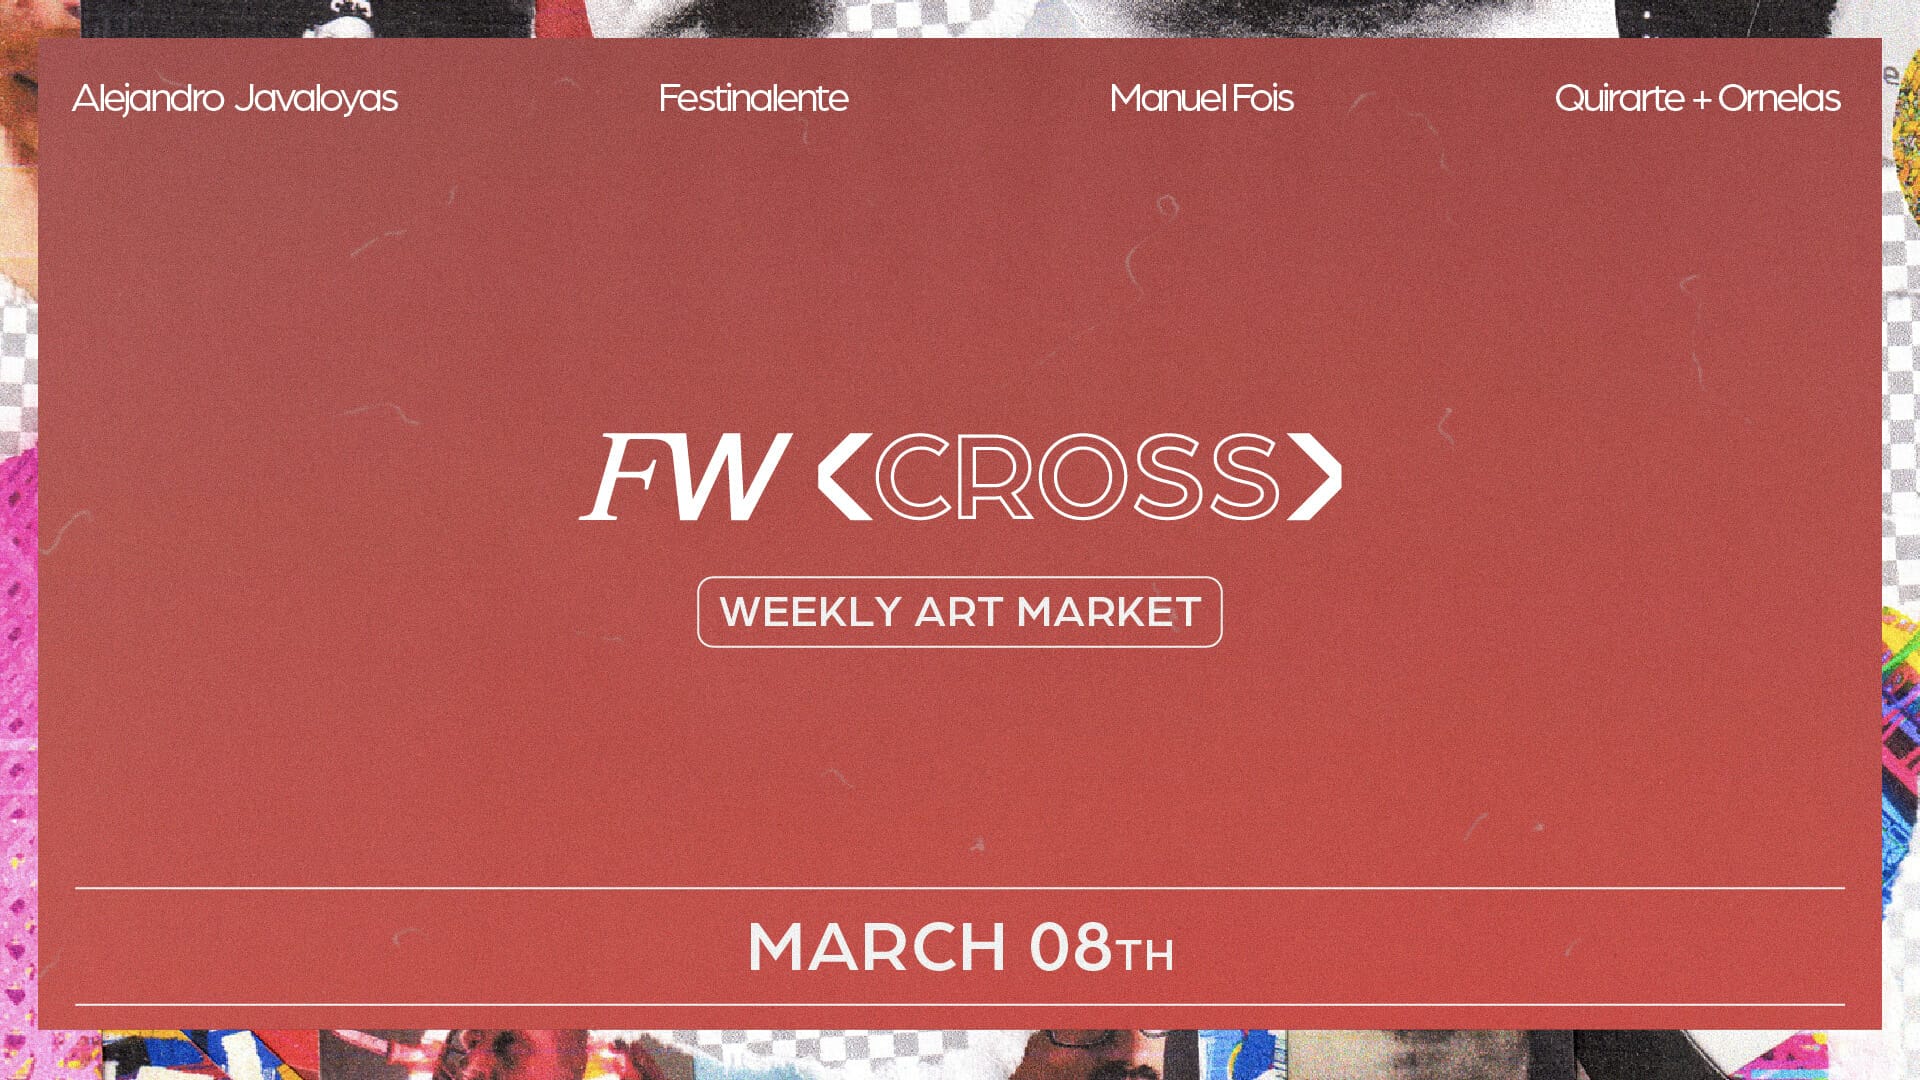 WEEKLY ART MARKET I | FW CROSS